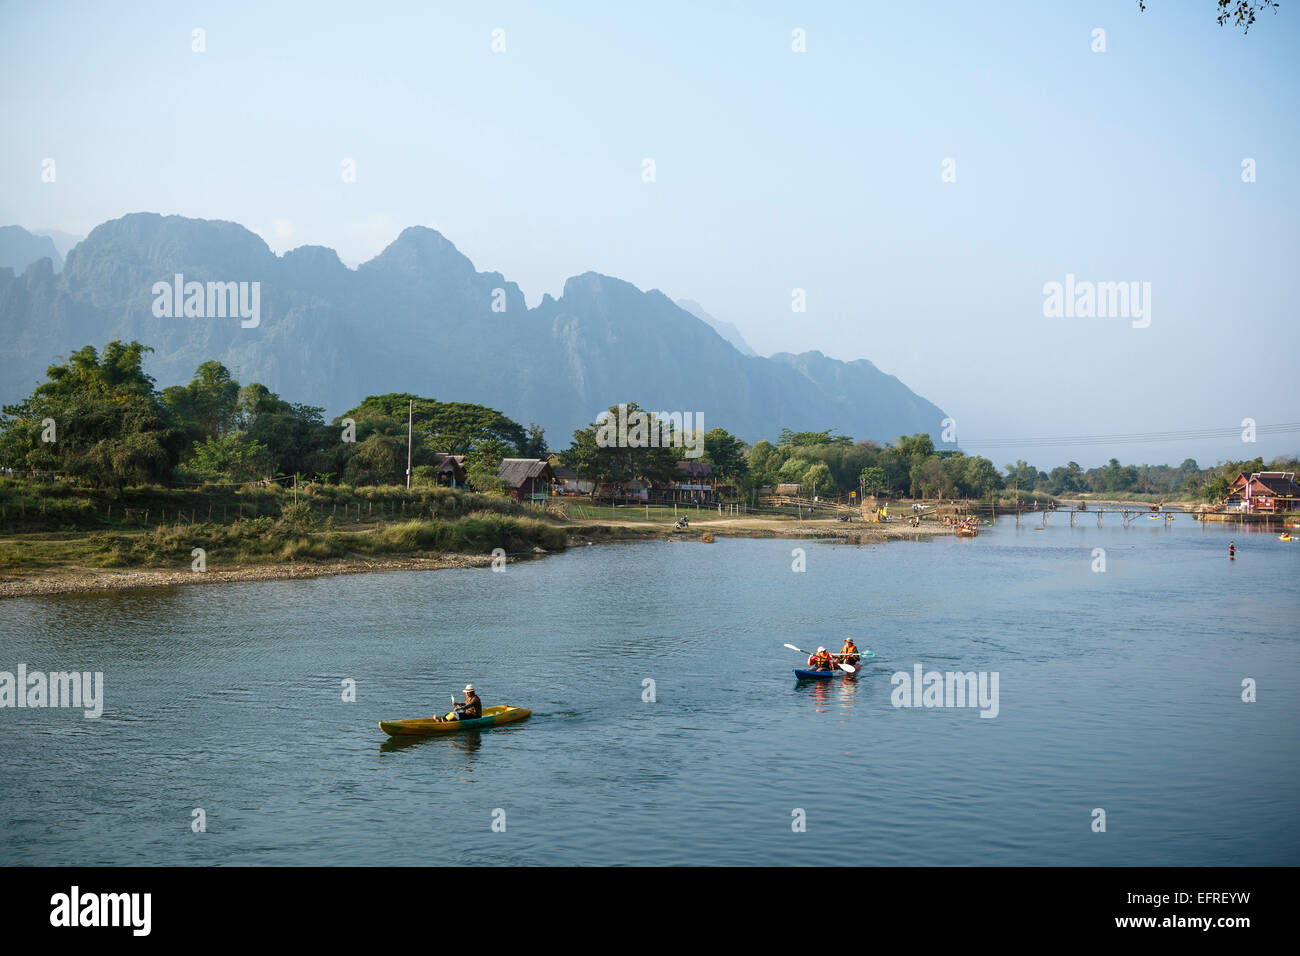 People kayaking at Nam Song river, Vang Vieng, Laos. Stock Photo